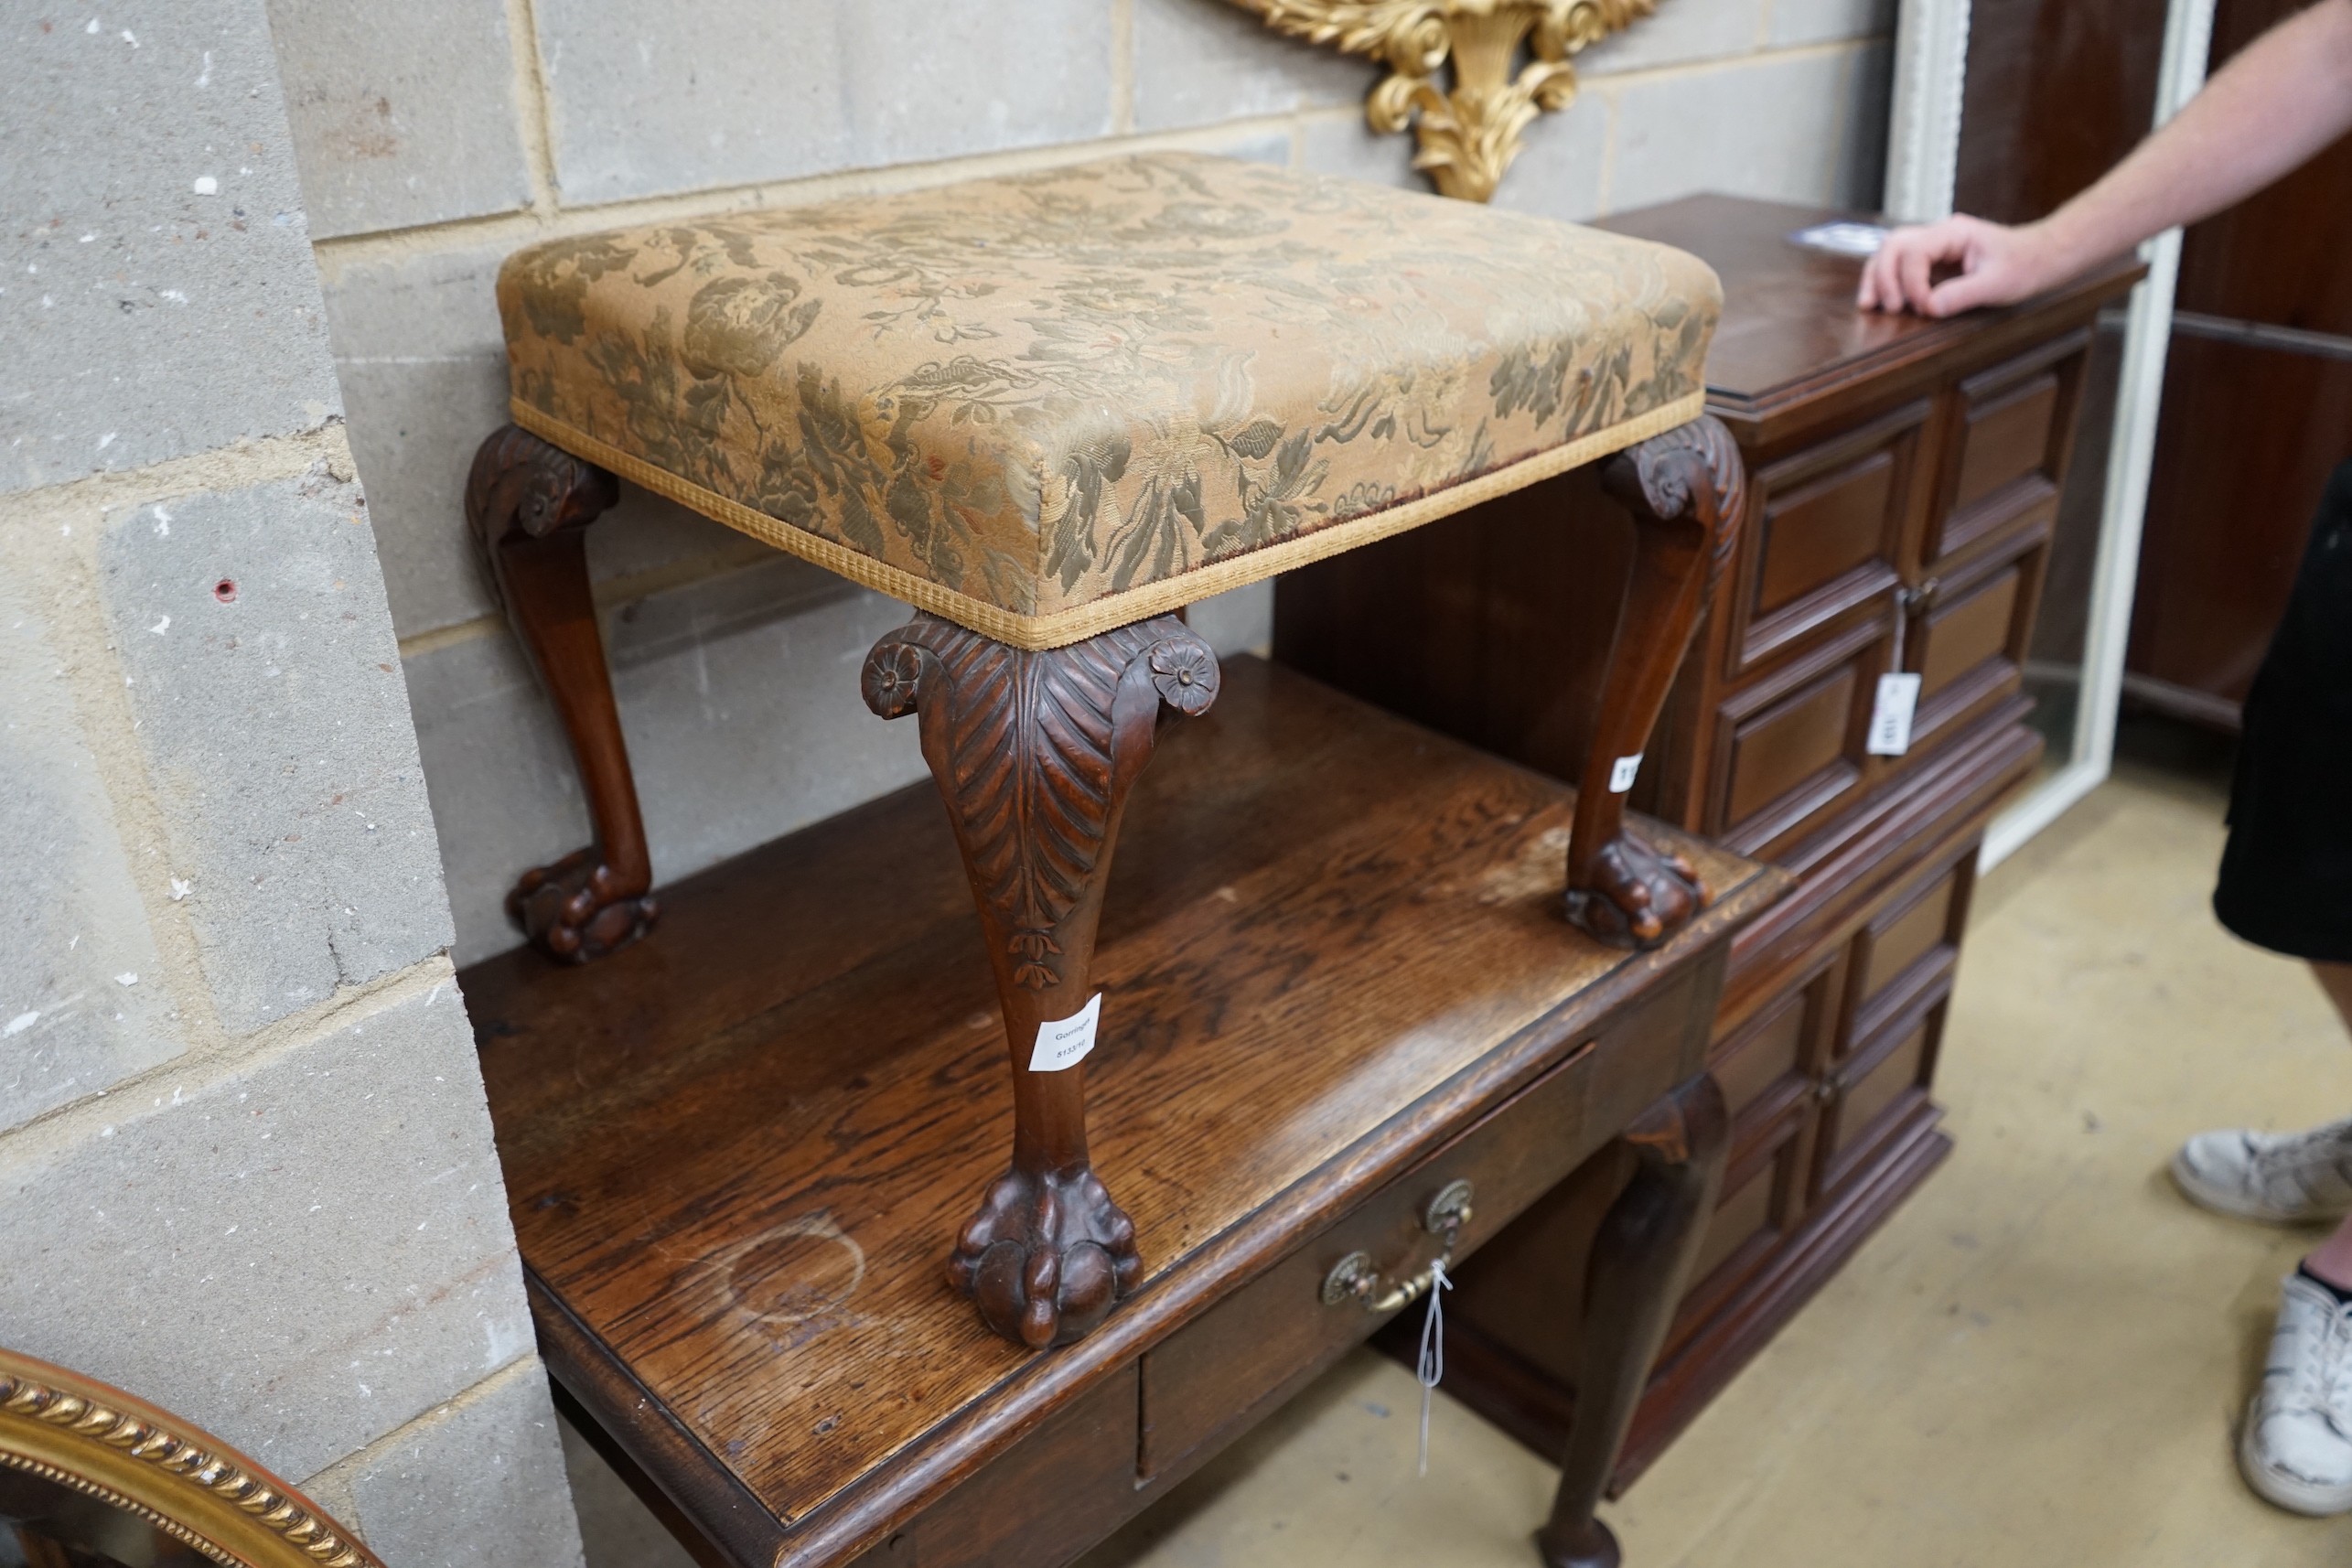 A George II style walnut dressing stool, width 57cm, depth 49cm, height 44cm